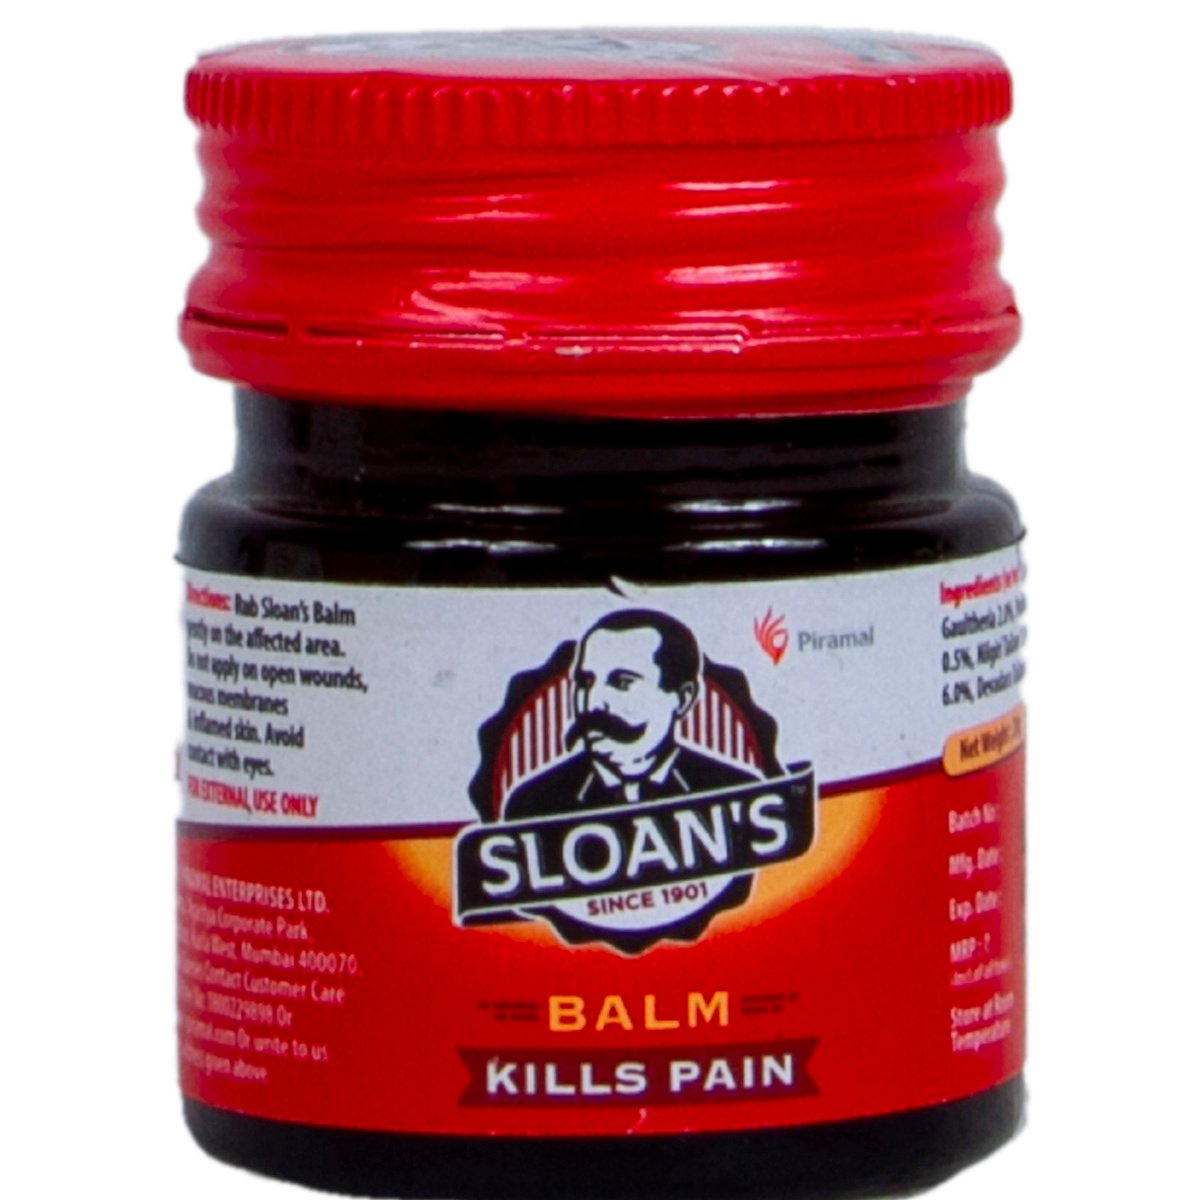 Sloan's Balm Kills Pain 20 g